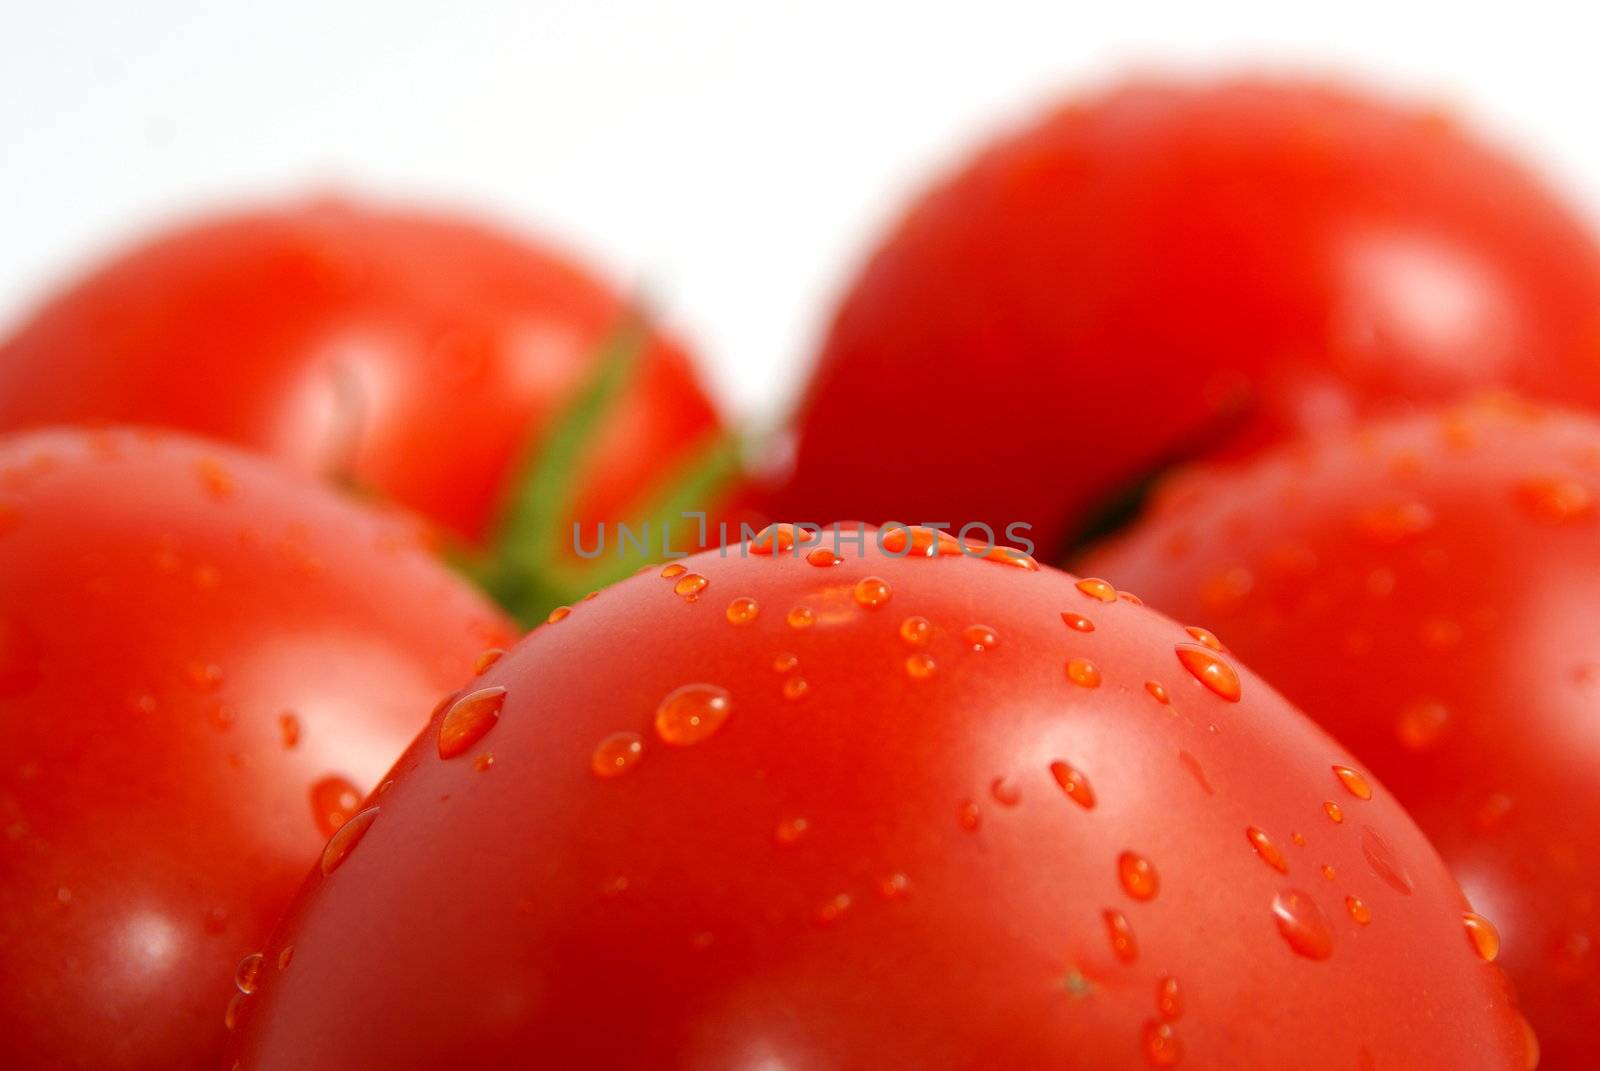 Tomatoes on white by pmisak